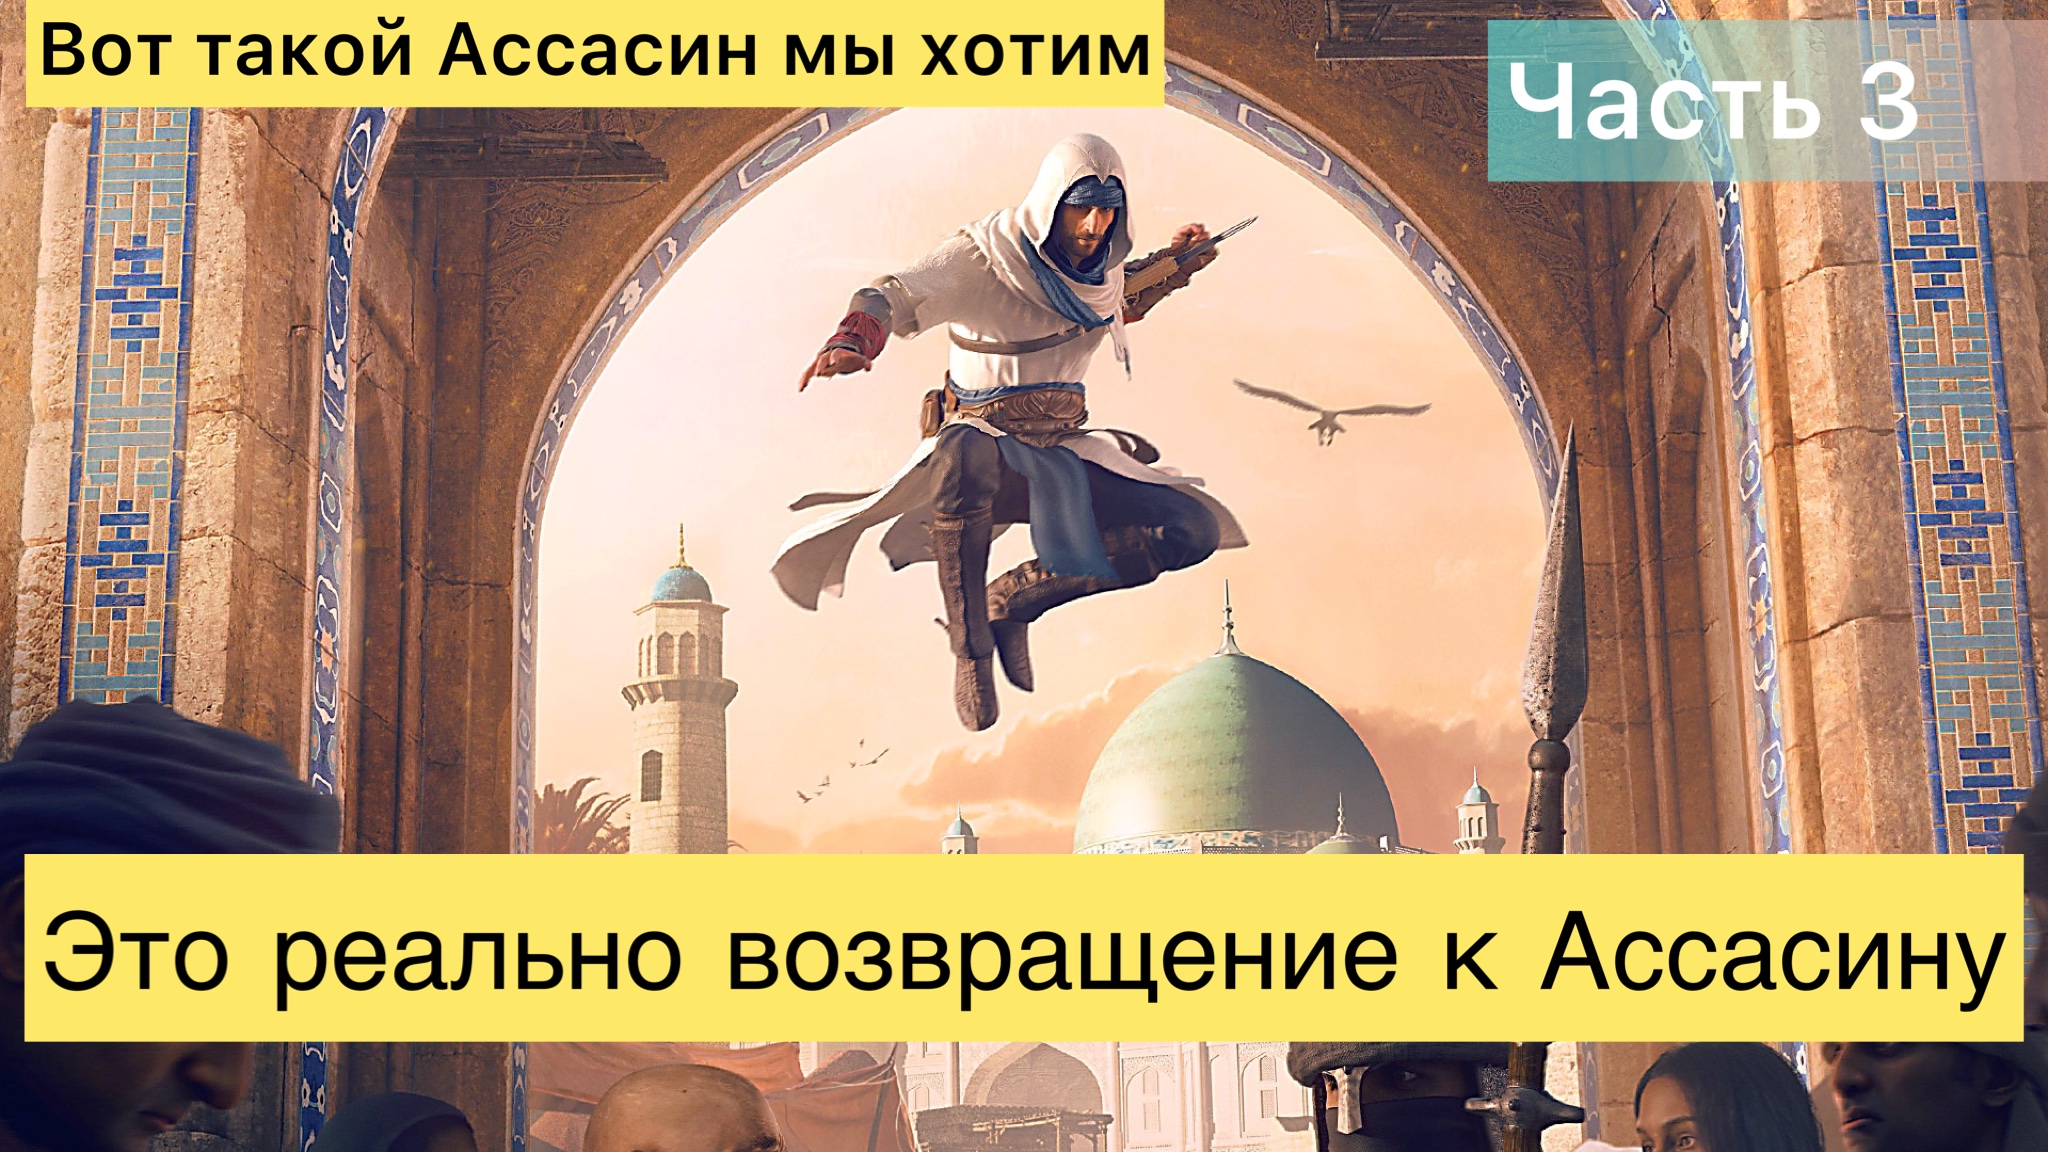 Assassin’s Creed Mirage "Разве это не красиво?" - 3 часть